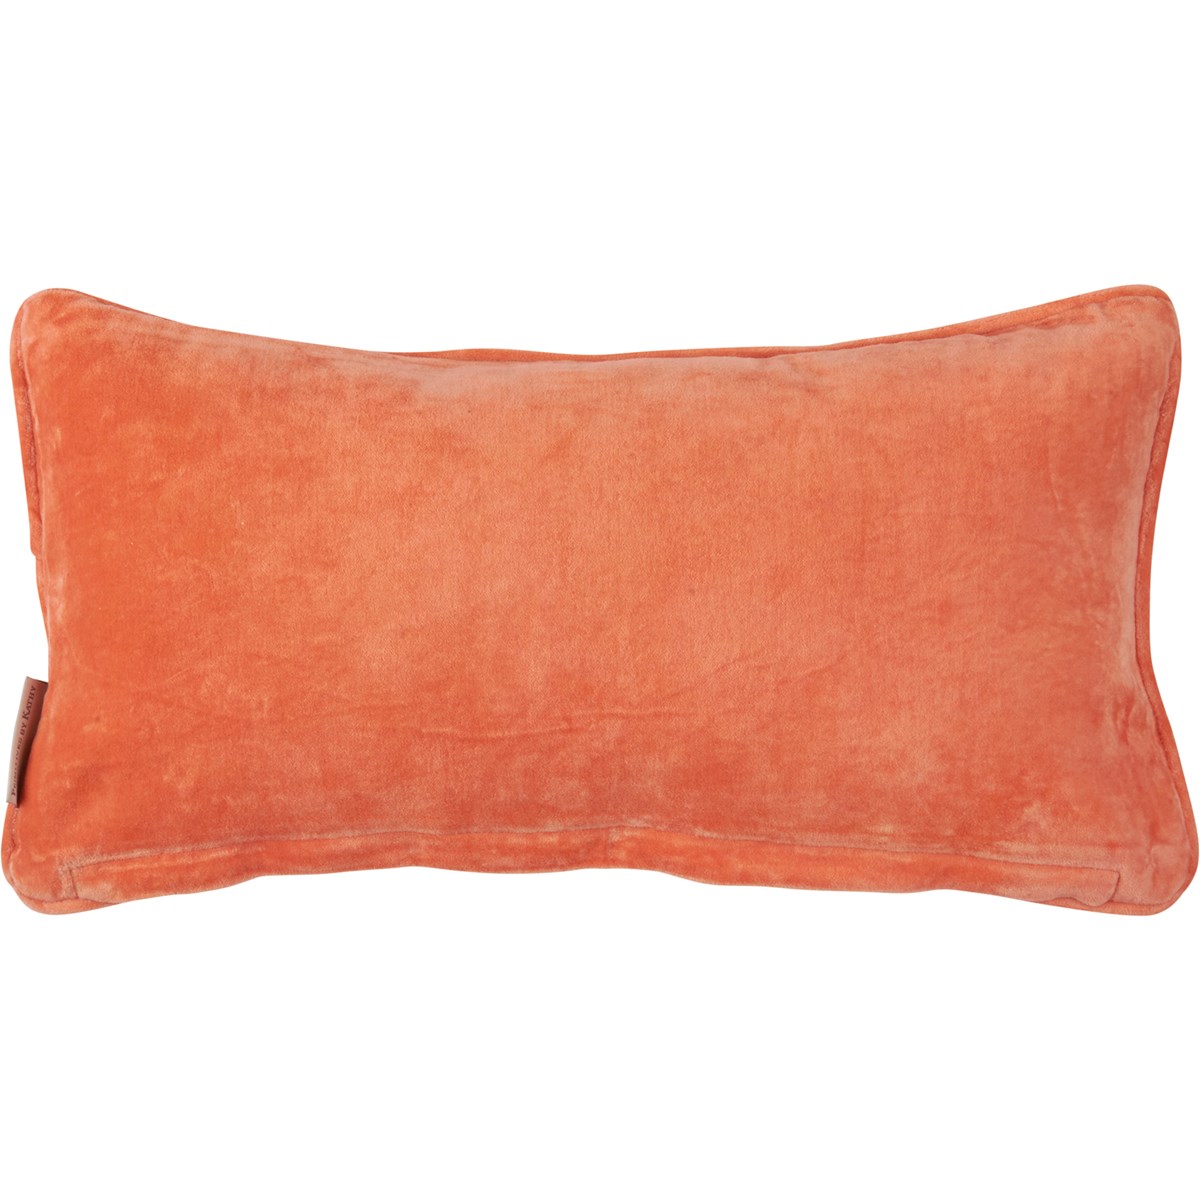 Sunset Pillow - Cotton, Velvet, Zipper